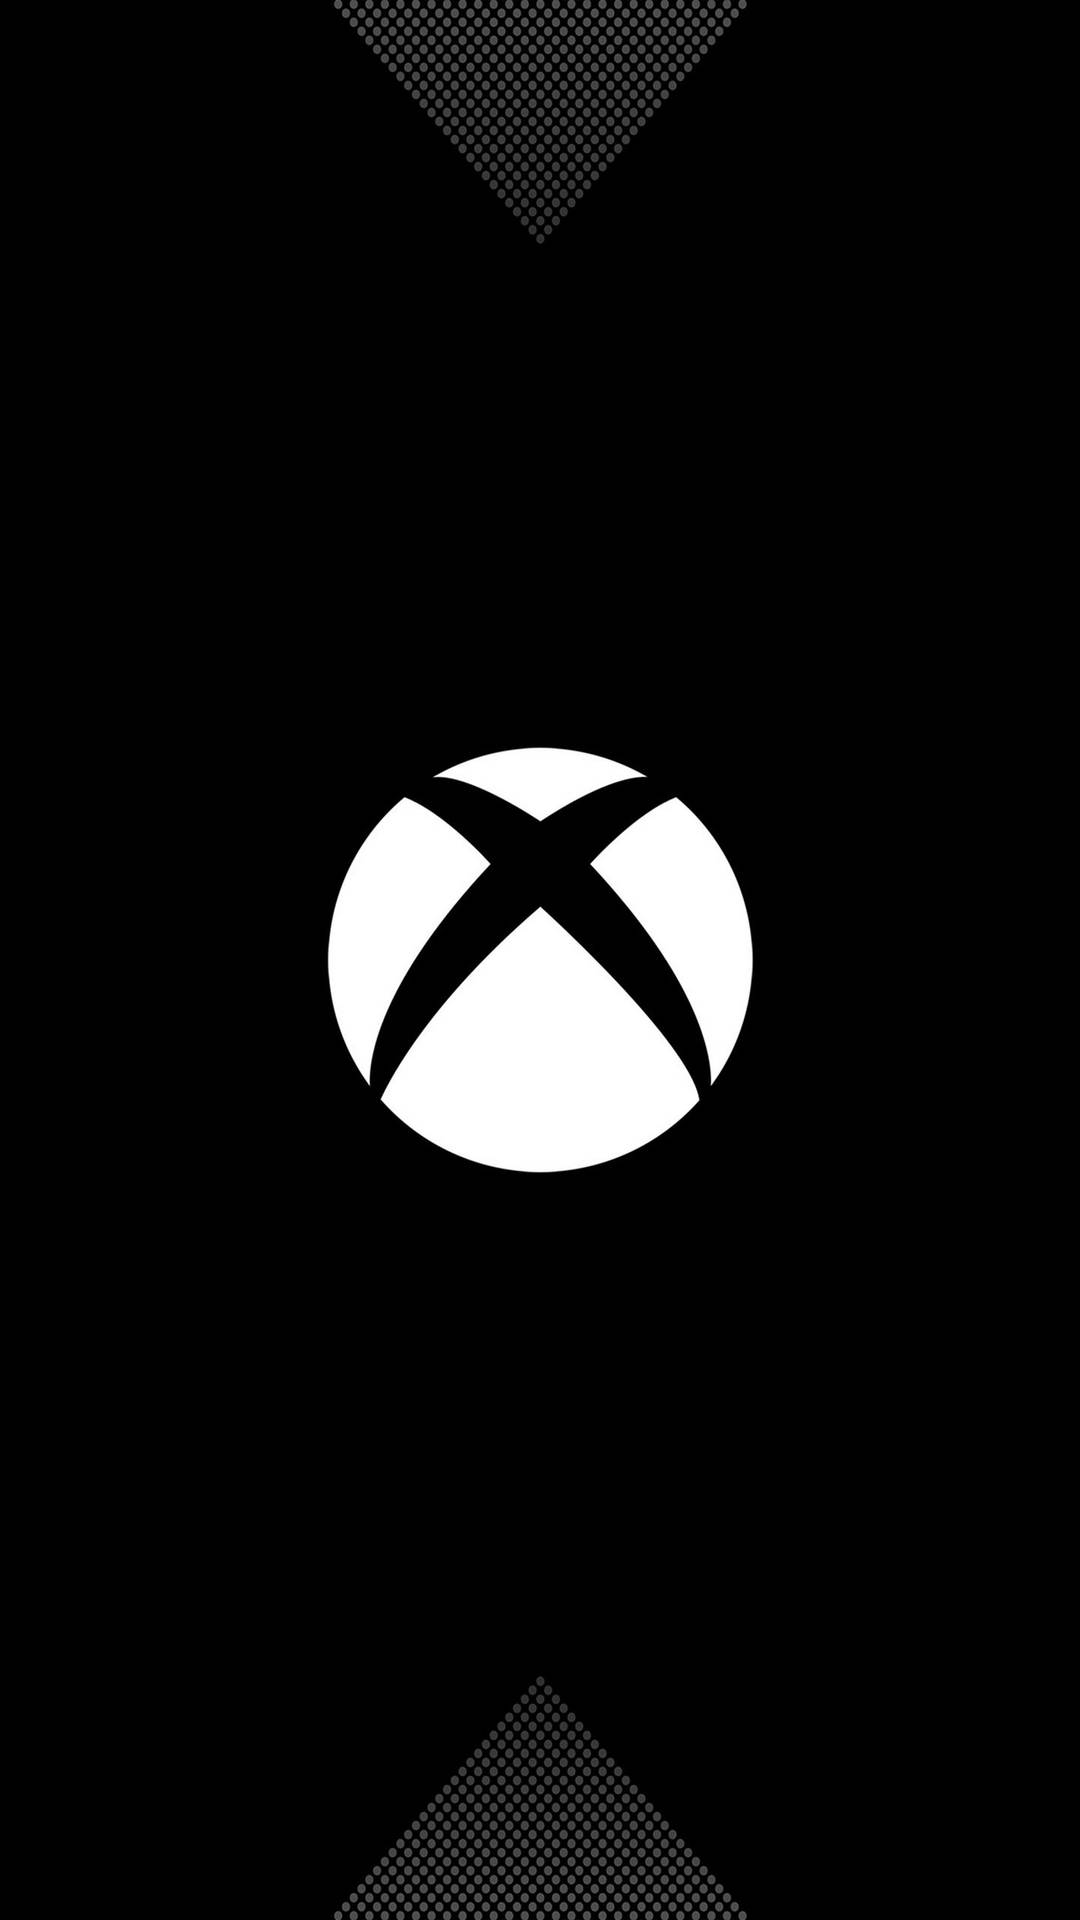 Svartiphone Xbox One X. Wallpaper